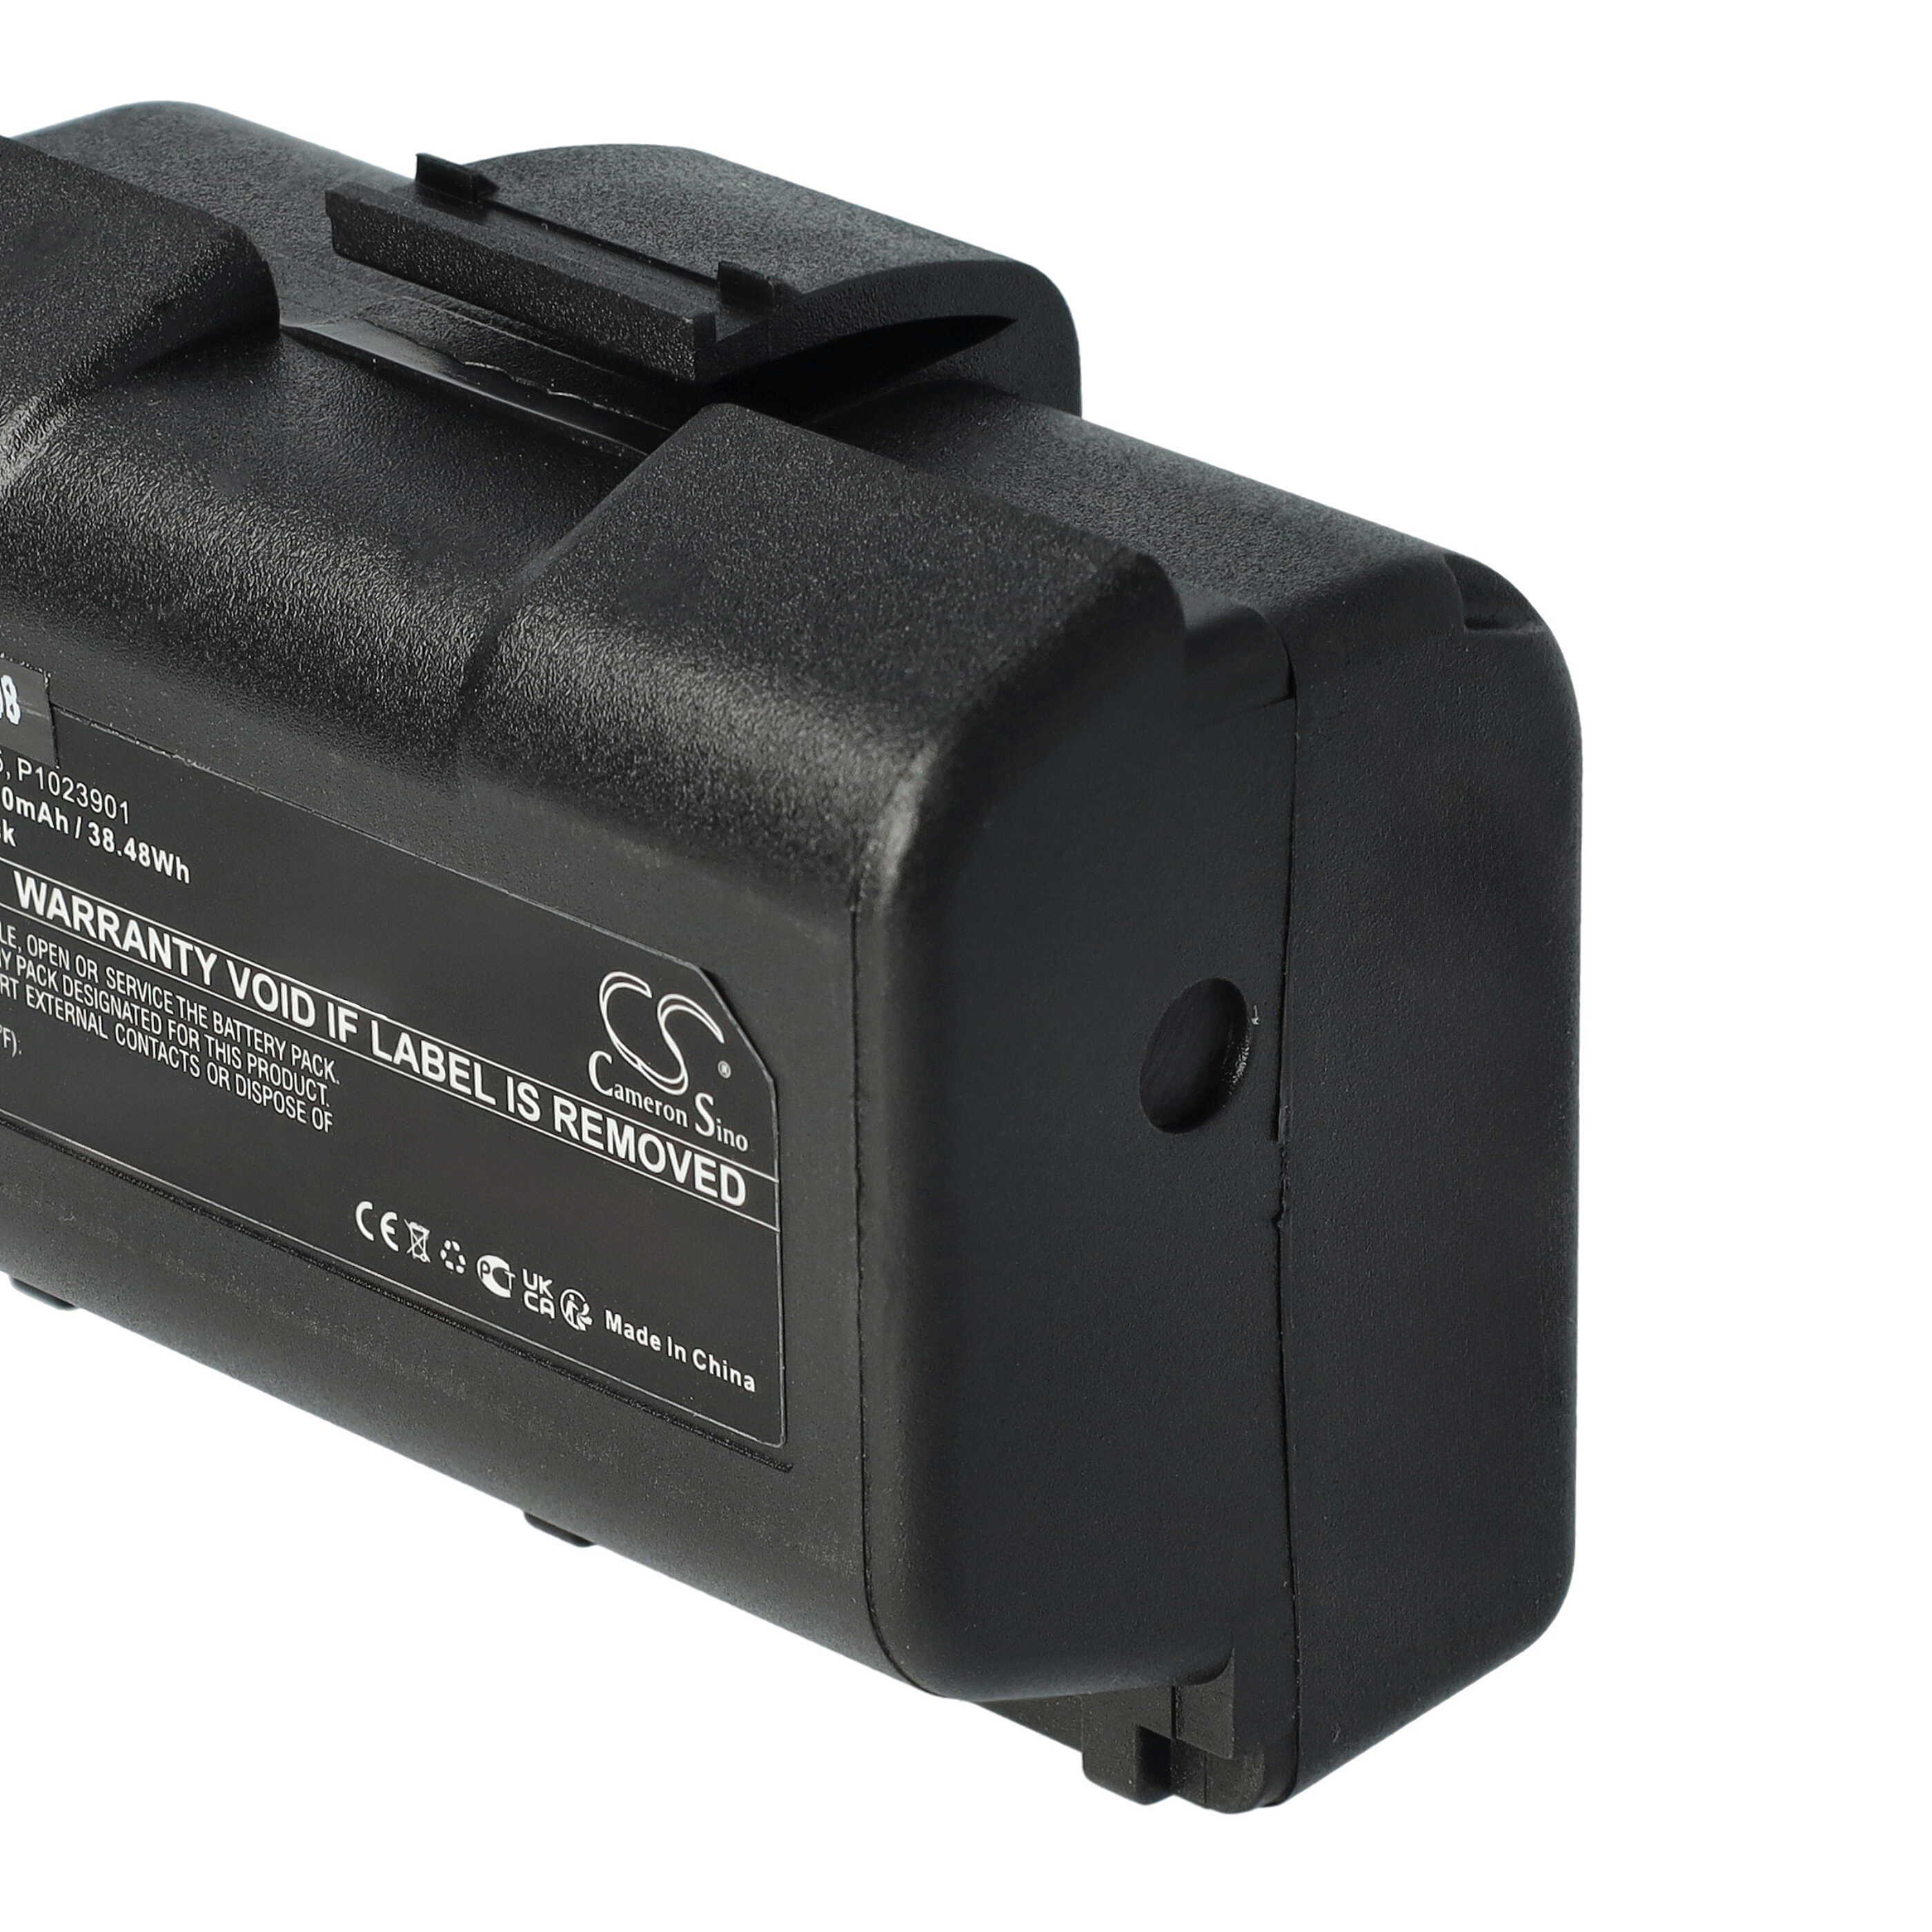 Batterie remplace Zebra AT16004, BTRY-MPP-34MA1-01, BTRY-MPP-34MAHC1-01 pour imprimante - 5200mAh 7,4V Li-ion